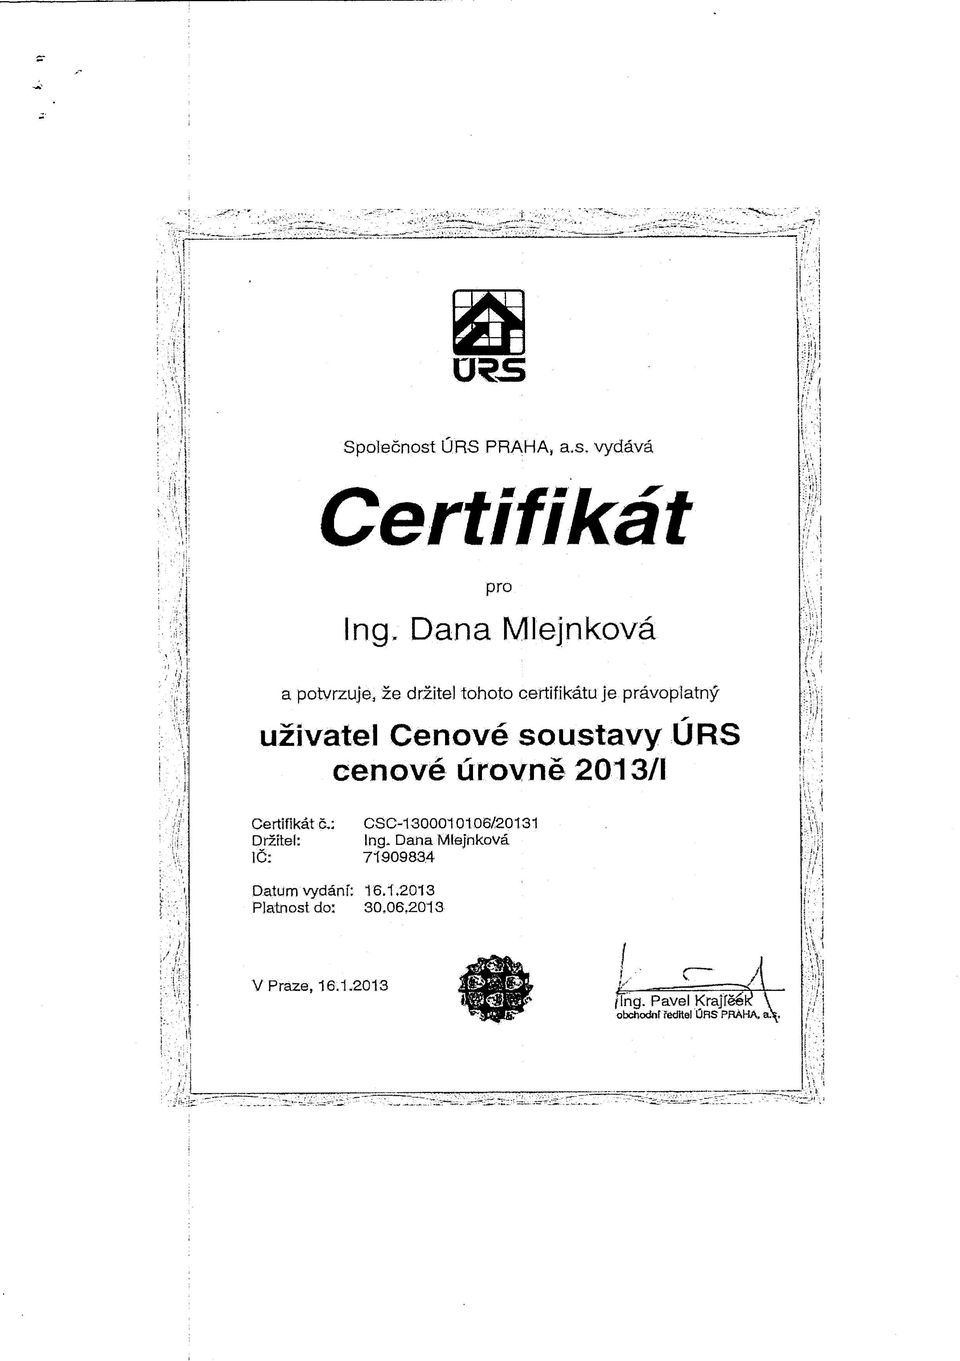 sousavy URS cenove urovne 2013/1 Cerifika 5.: CSC-1300010106/20131 Drzfel: Ing.